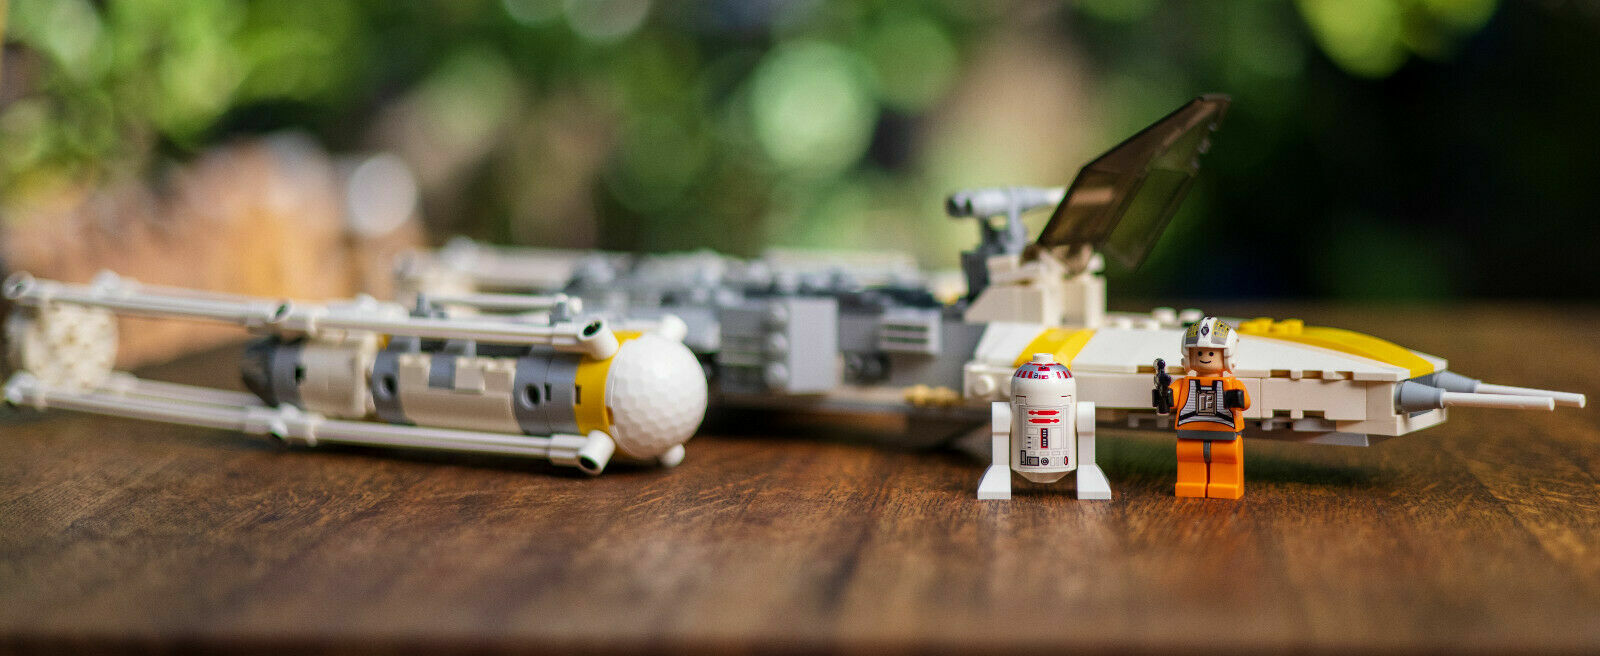 Lego Y-wing Fighter 7658 Episode 4/5/6 Star Wars Set